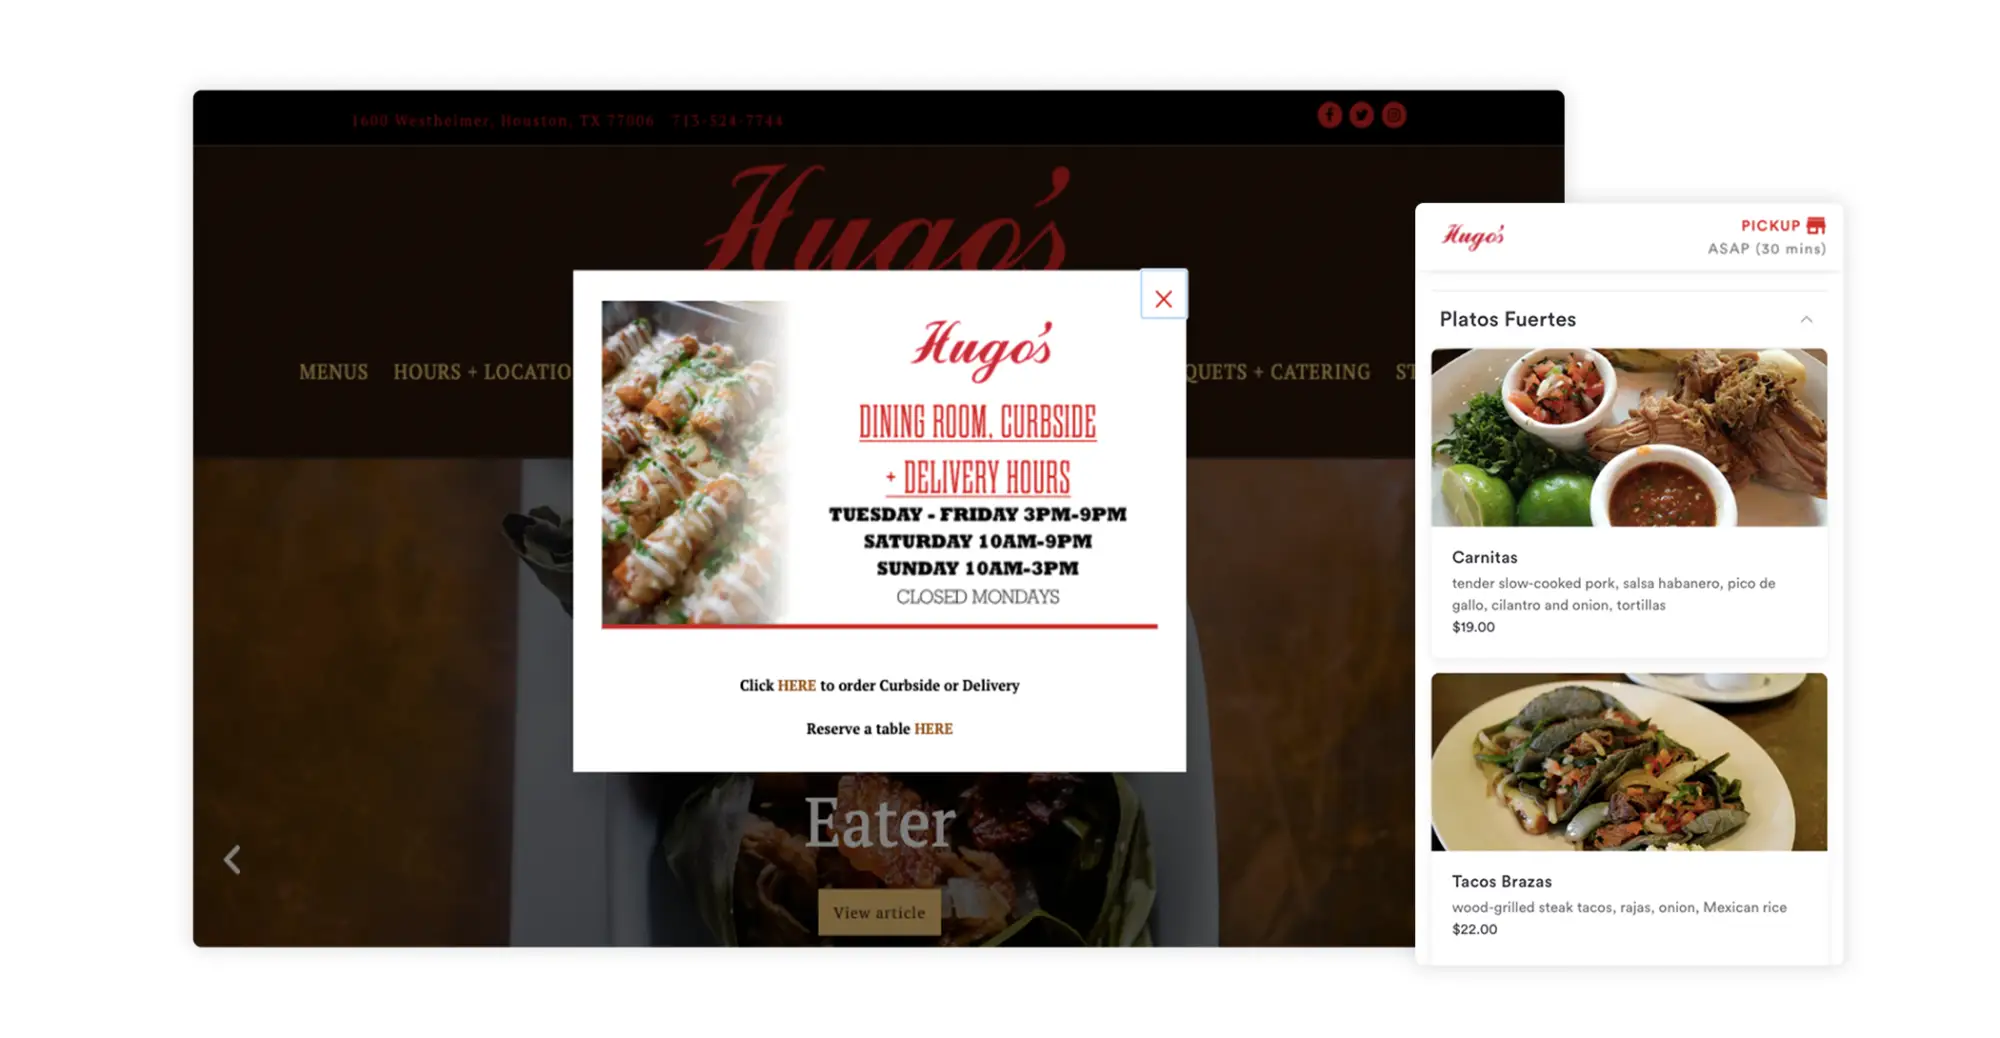 The website and online ordering for Hugo's Restaurant